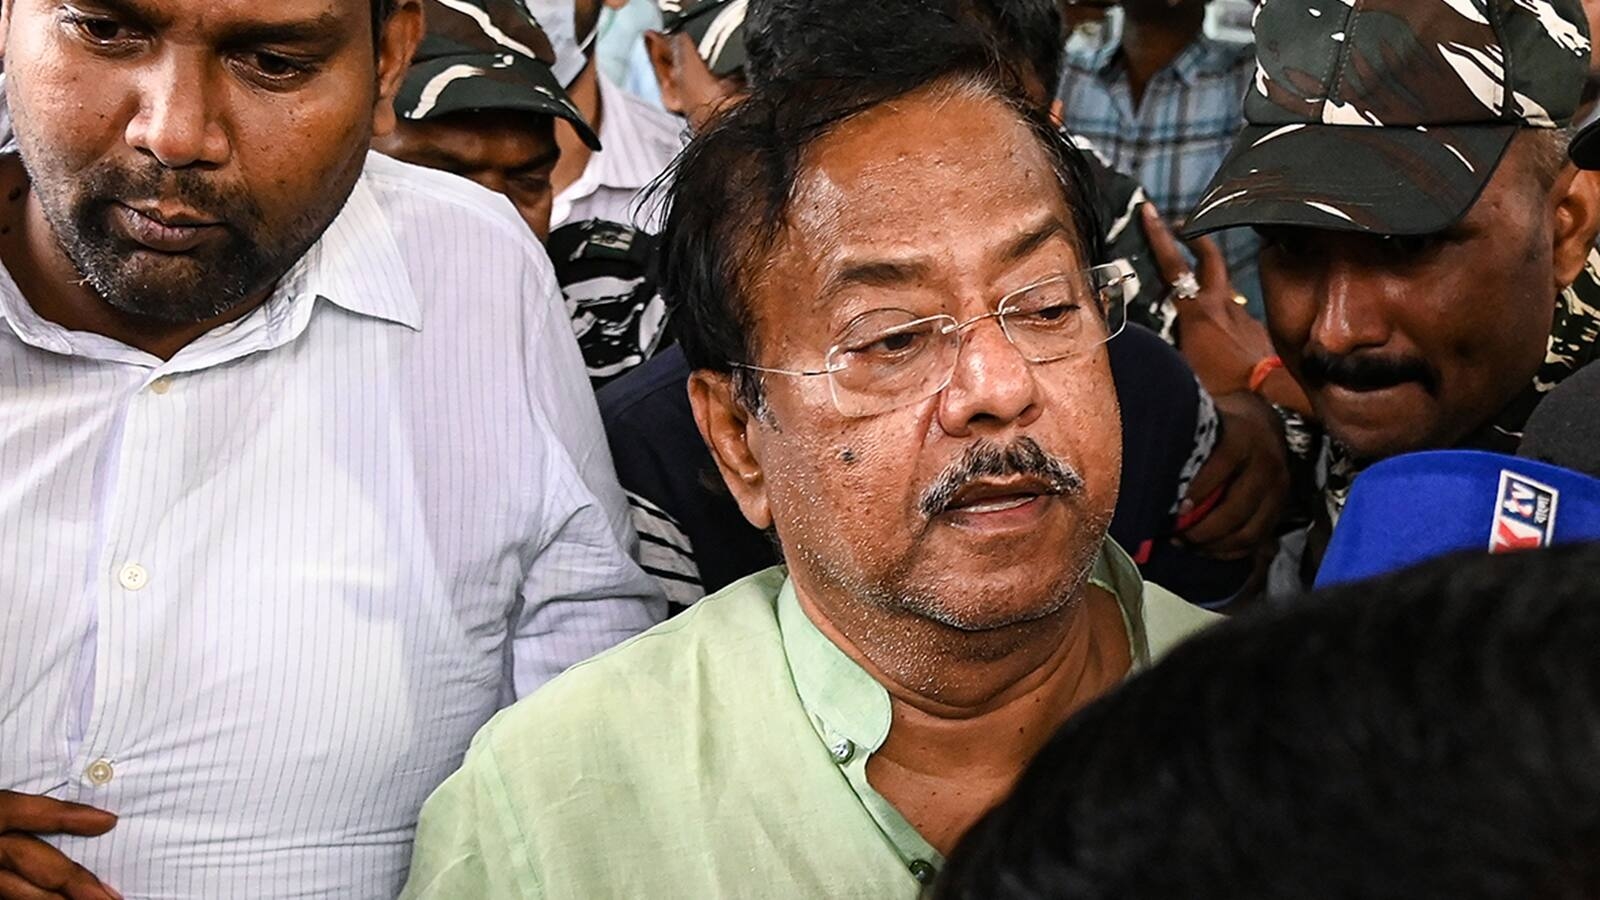 ED officials take Mallick for health check-up | Kolkata News